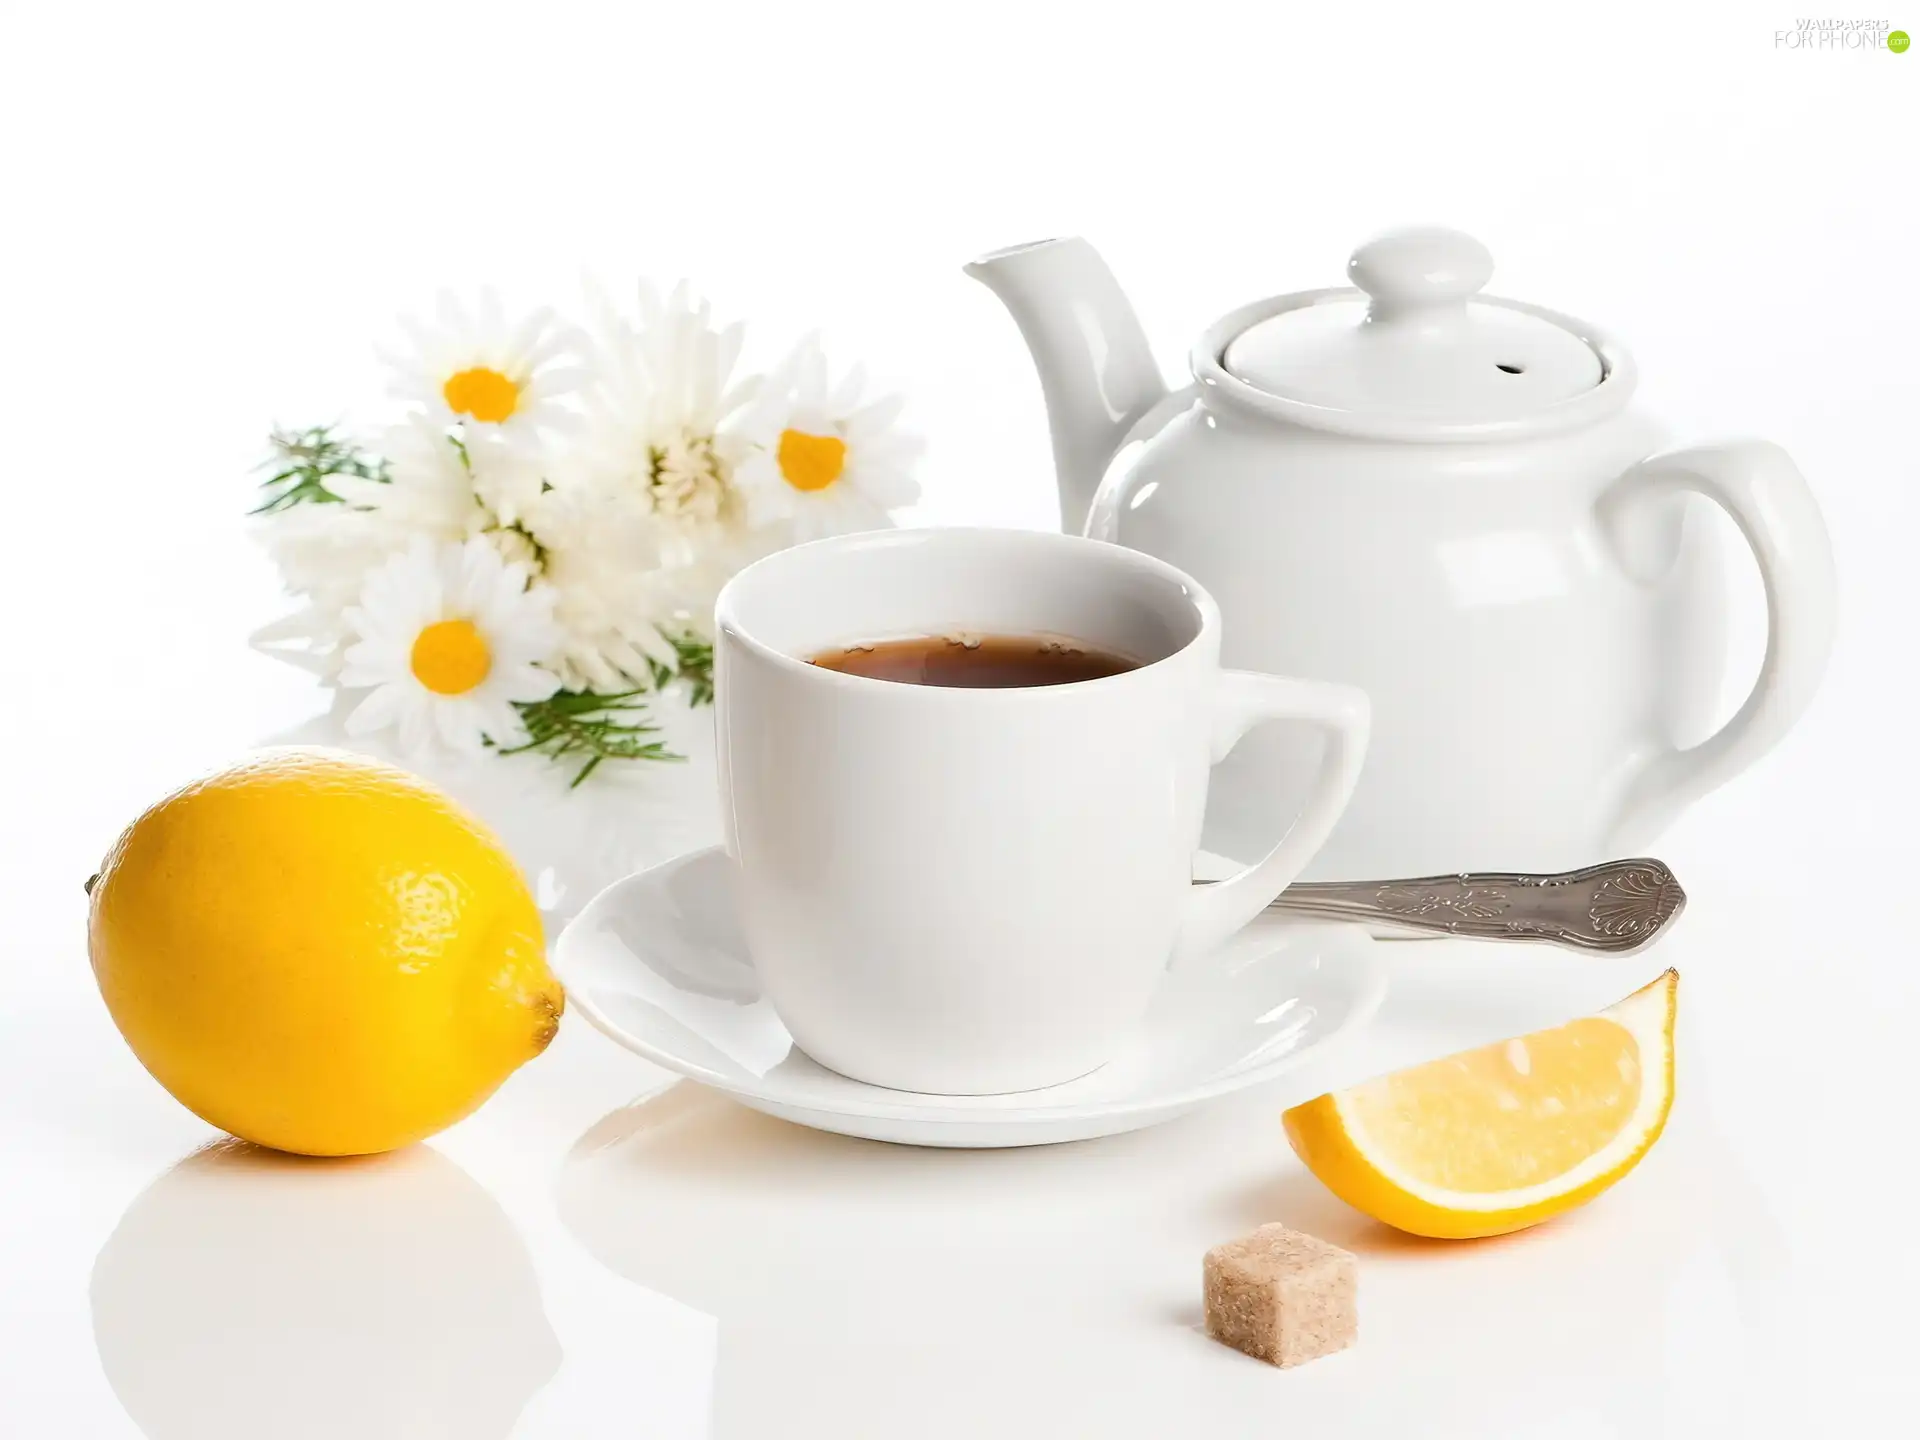 jug, cup, daisy, Lemon, tea